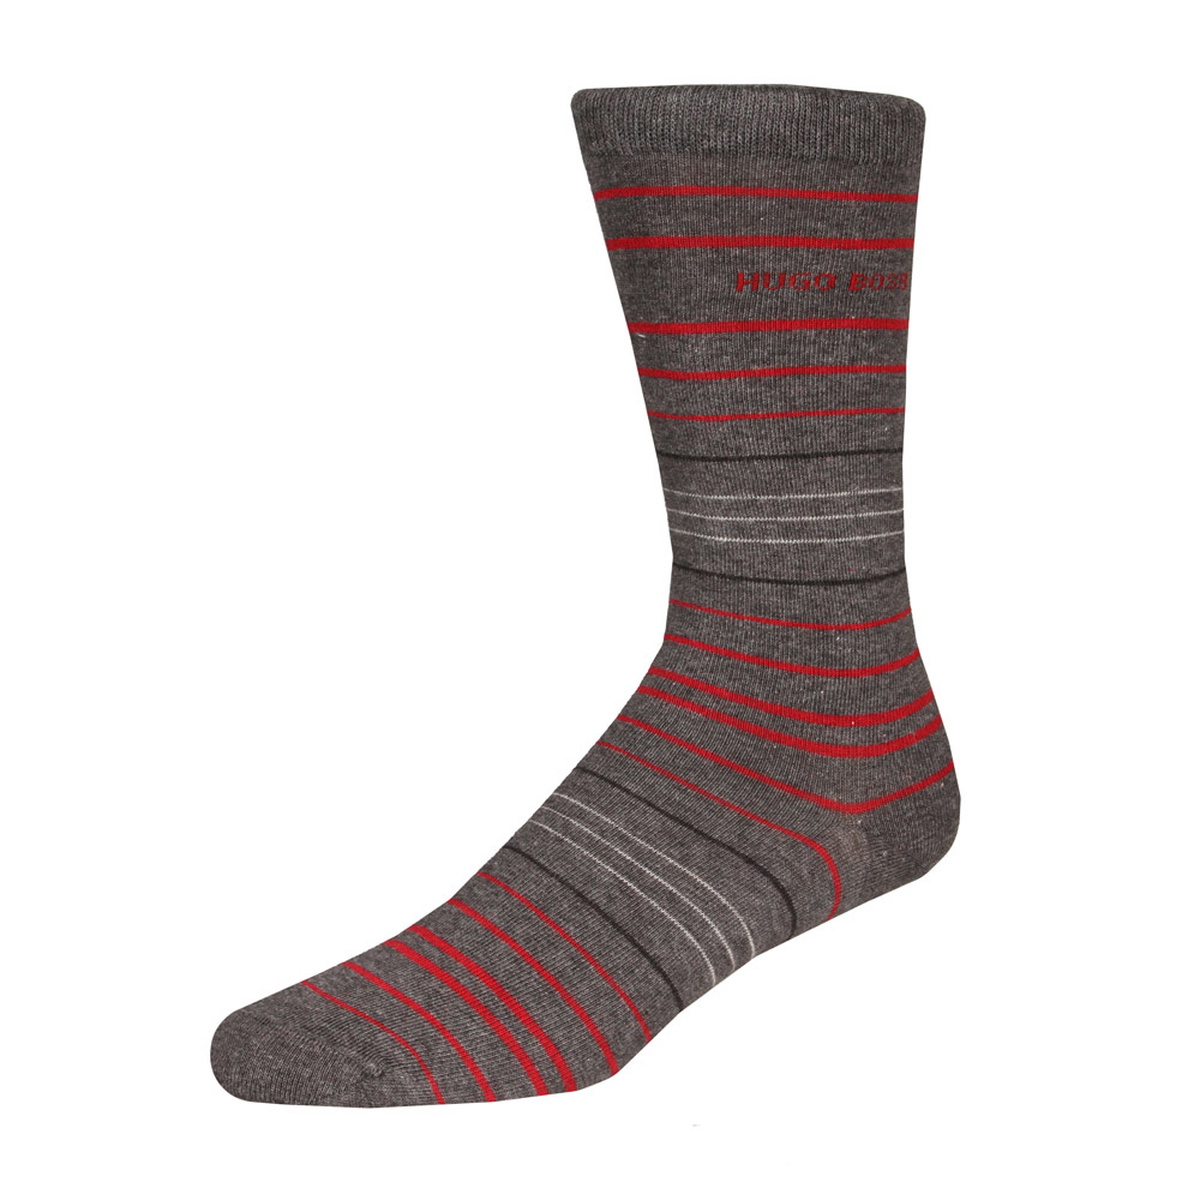 Two-Pack Design Socks - Marl Grey / Red